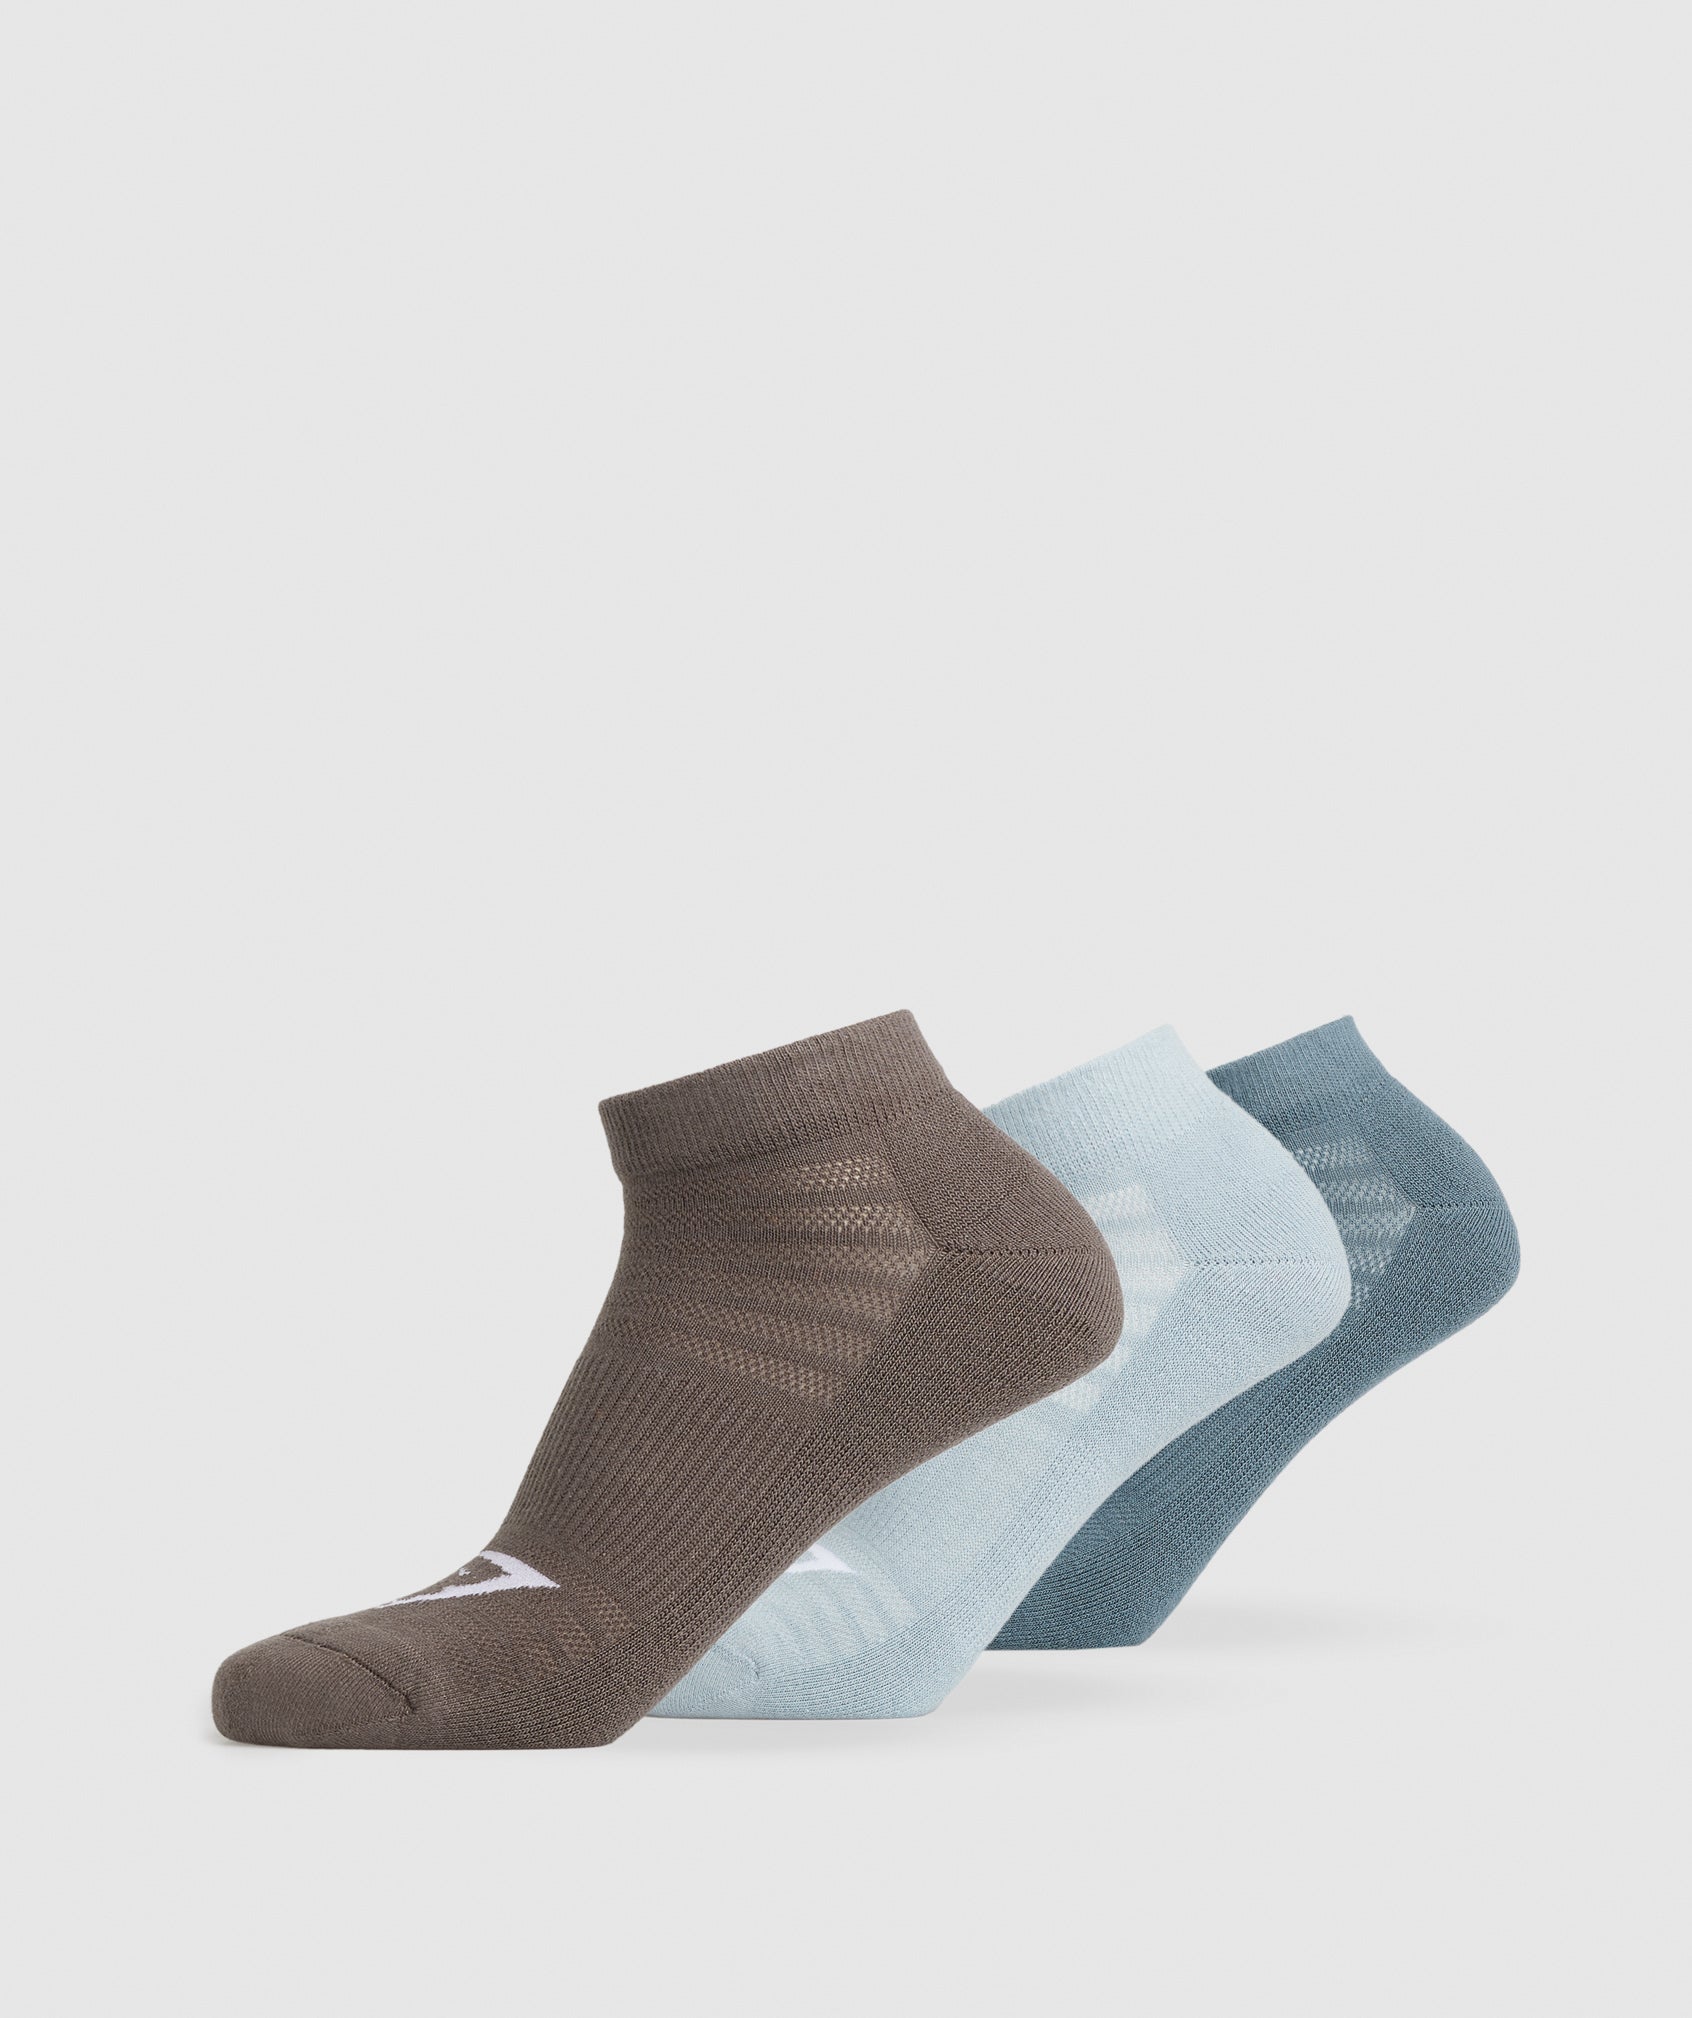 Ankle Socks 3pk in Denim Teal/Salt Blue/Camo Brown - view 1